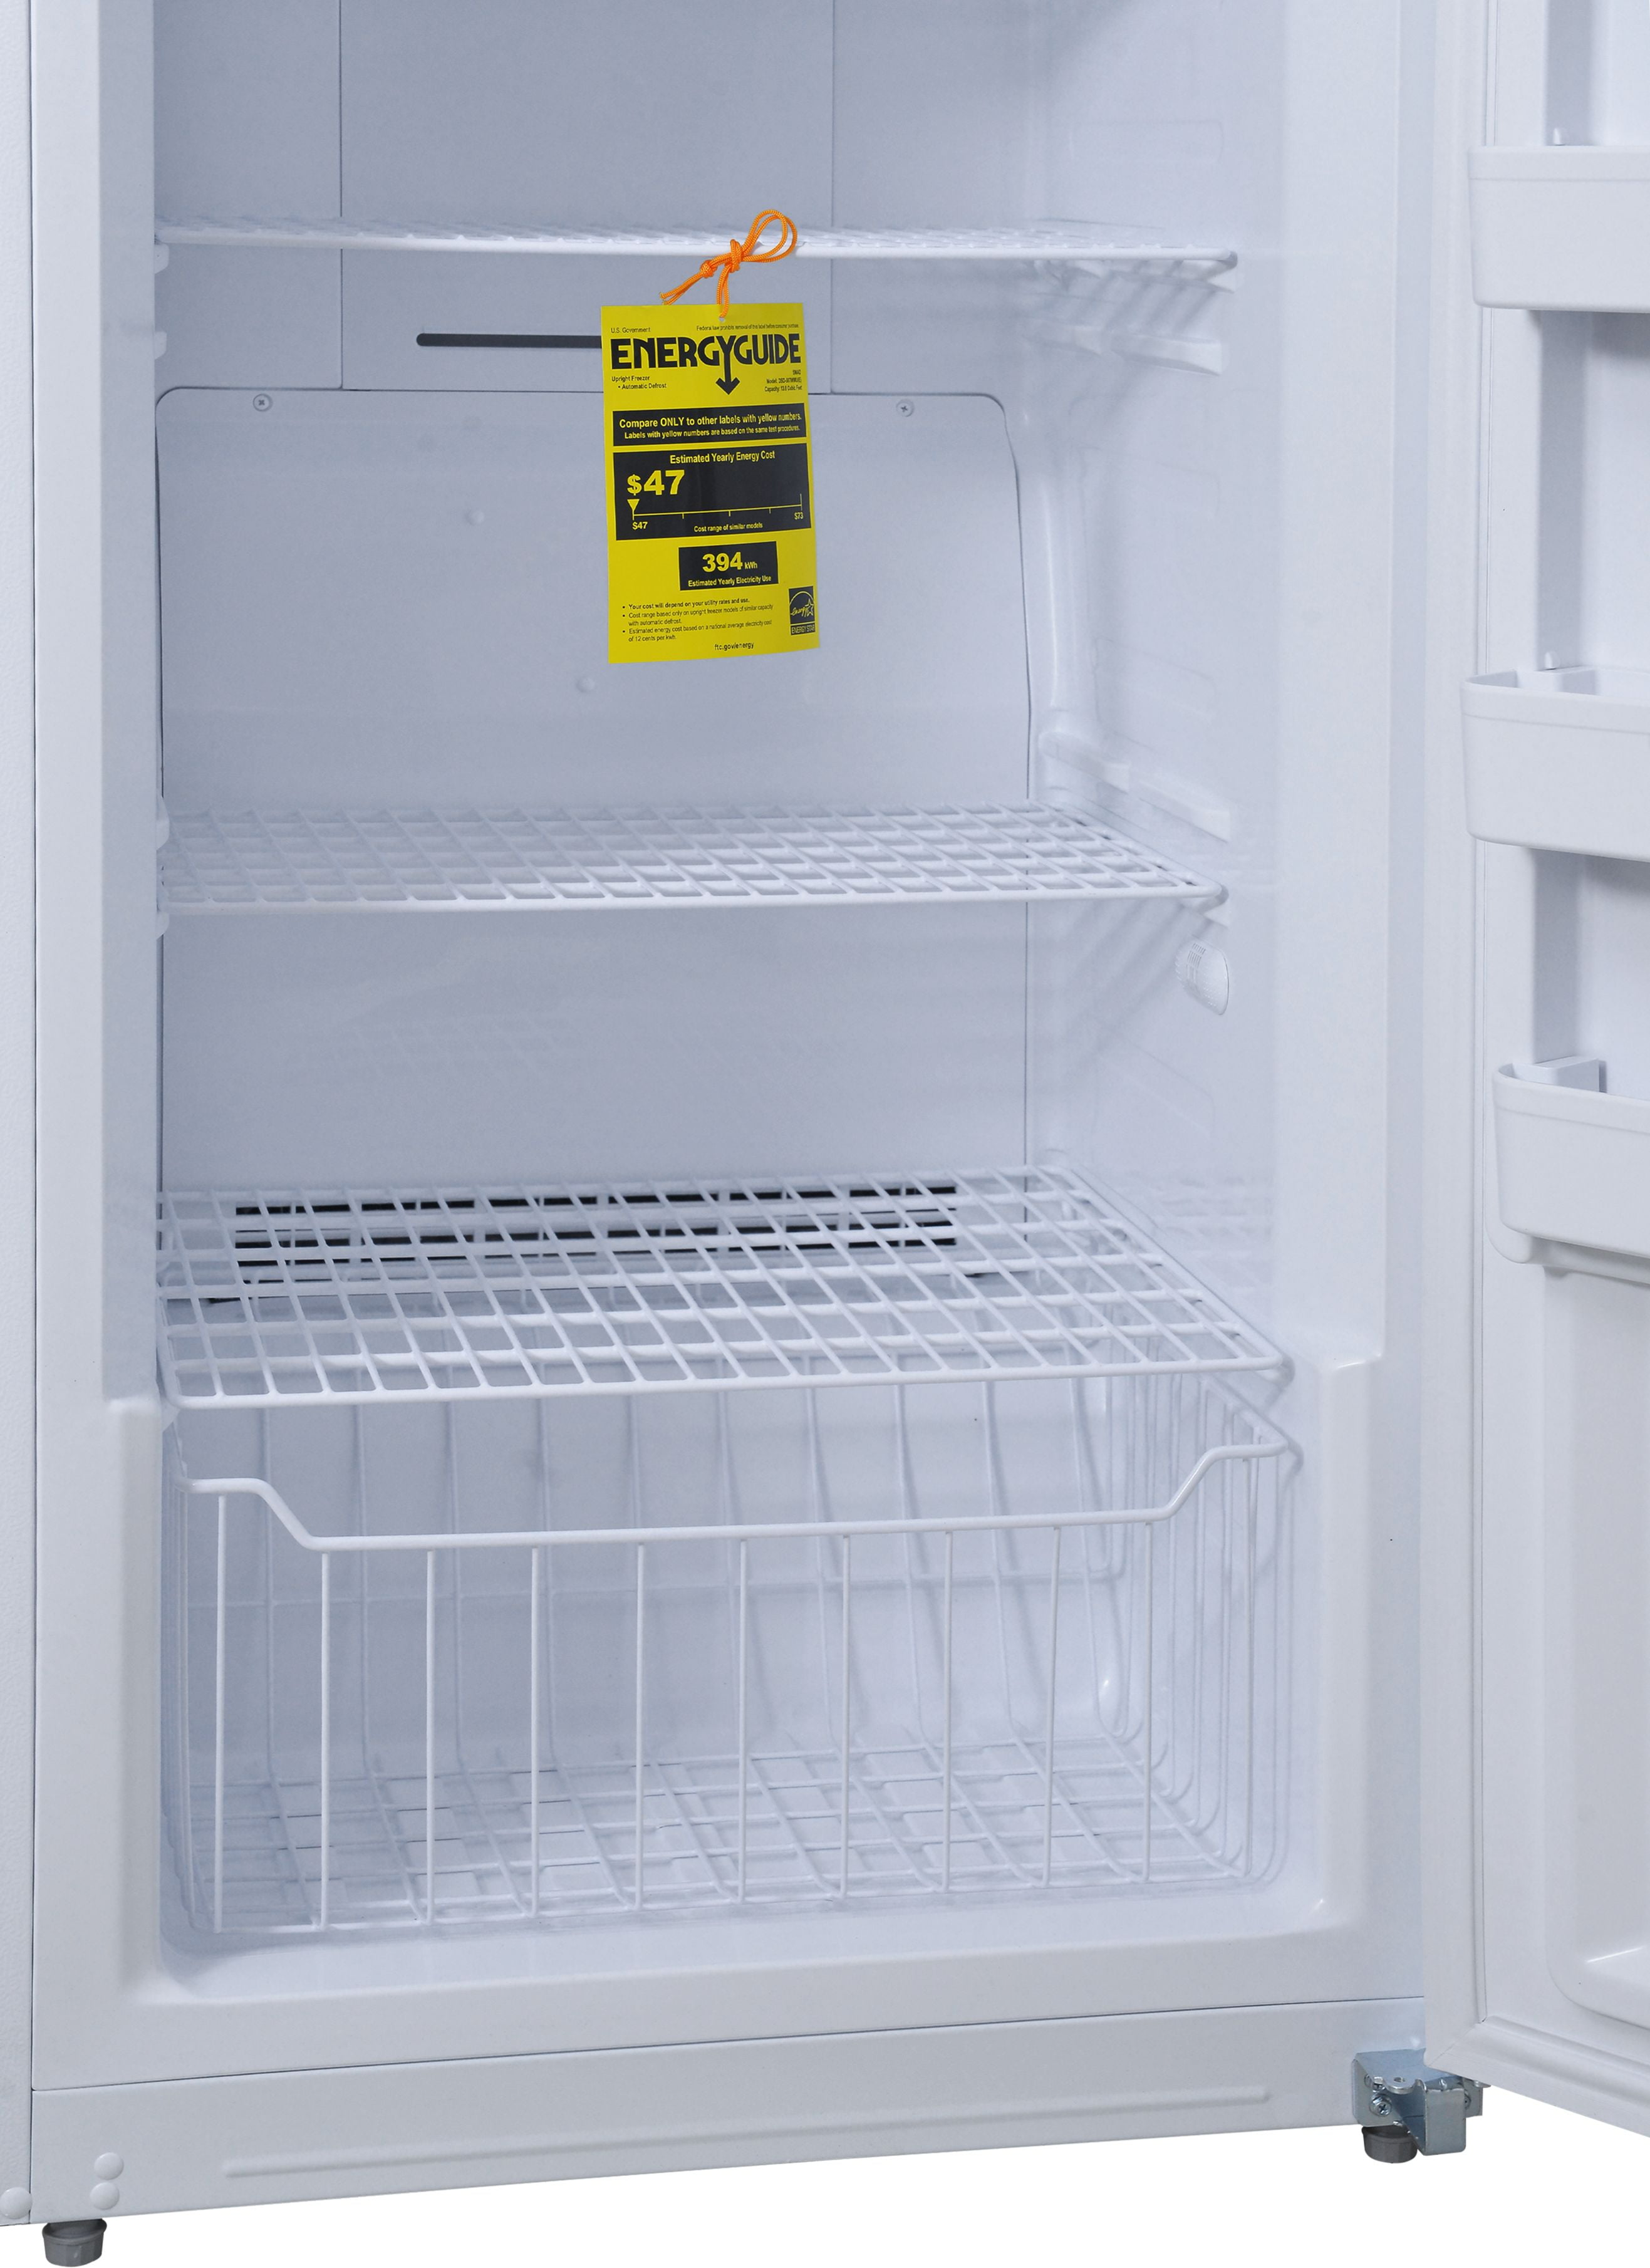 Freezer Upright 13.8 Cu ft, Conversion Standing Freezer and Refrigerator,  Full Size Refrigerator Frost Free, Freezerless Refrigerator for Kitchen